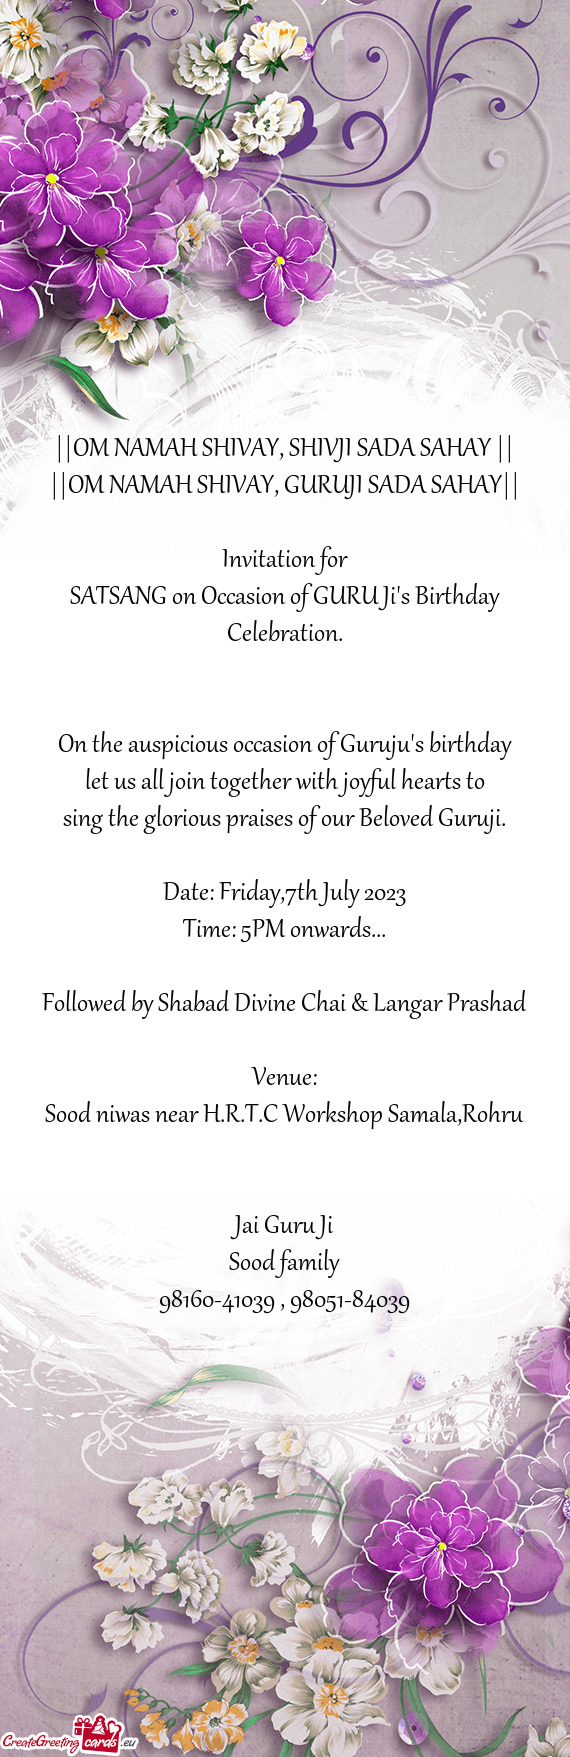 On the auspicious occasion of Guruju